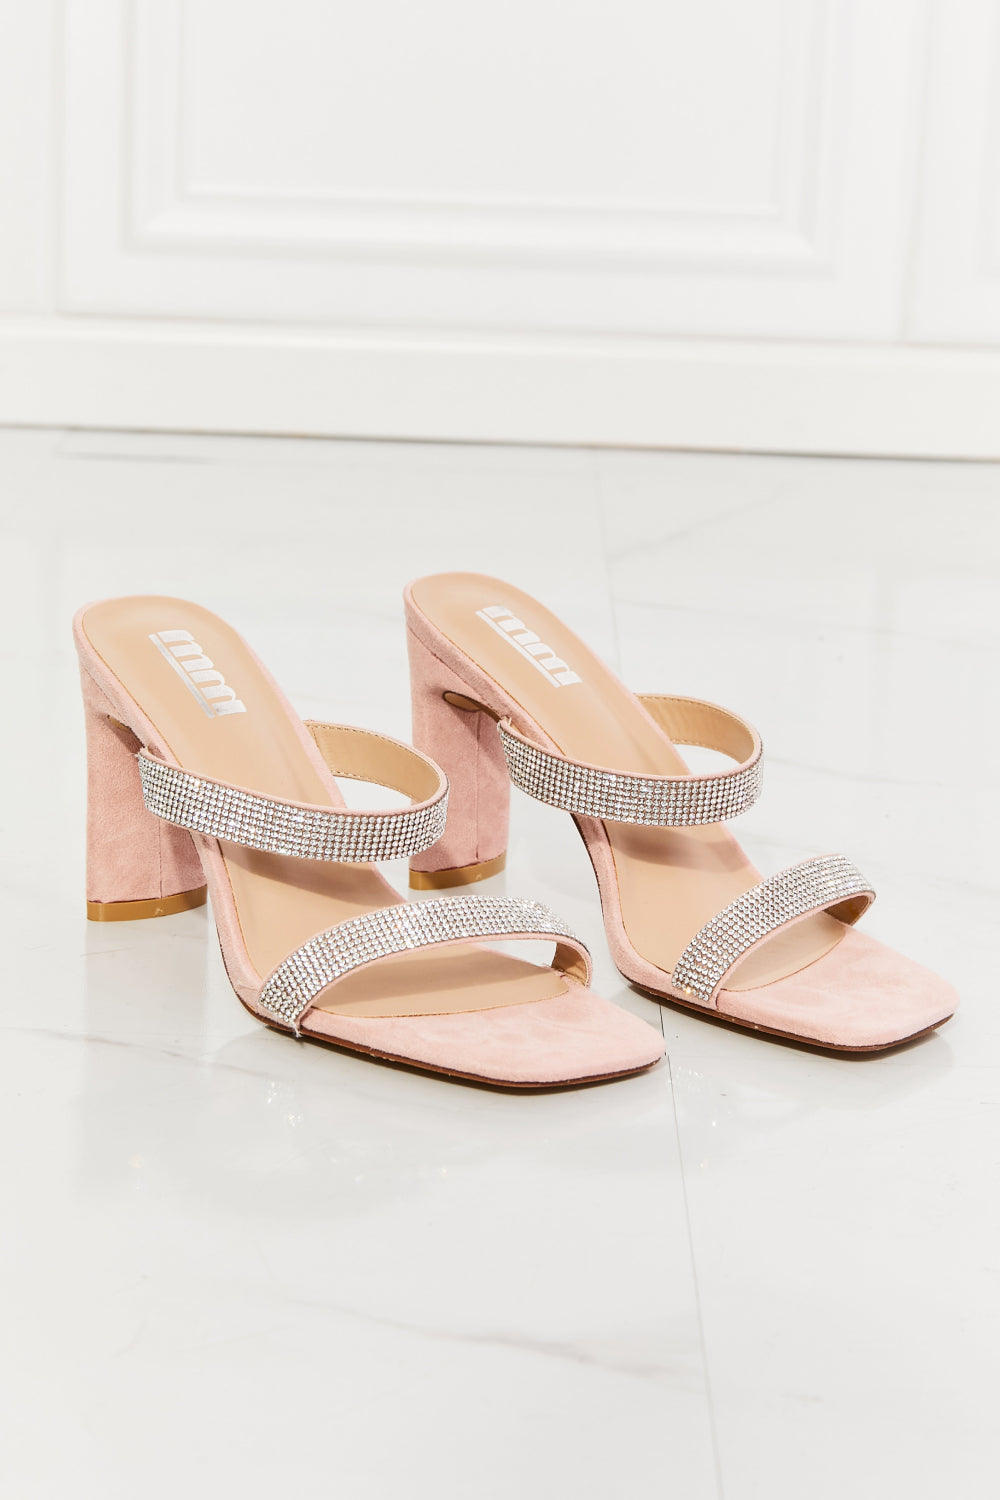 MMShoes Leave A Little Sparkle Rhinestone Block Heel Sandal in Pink - nailedmoms